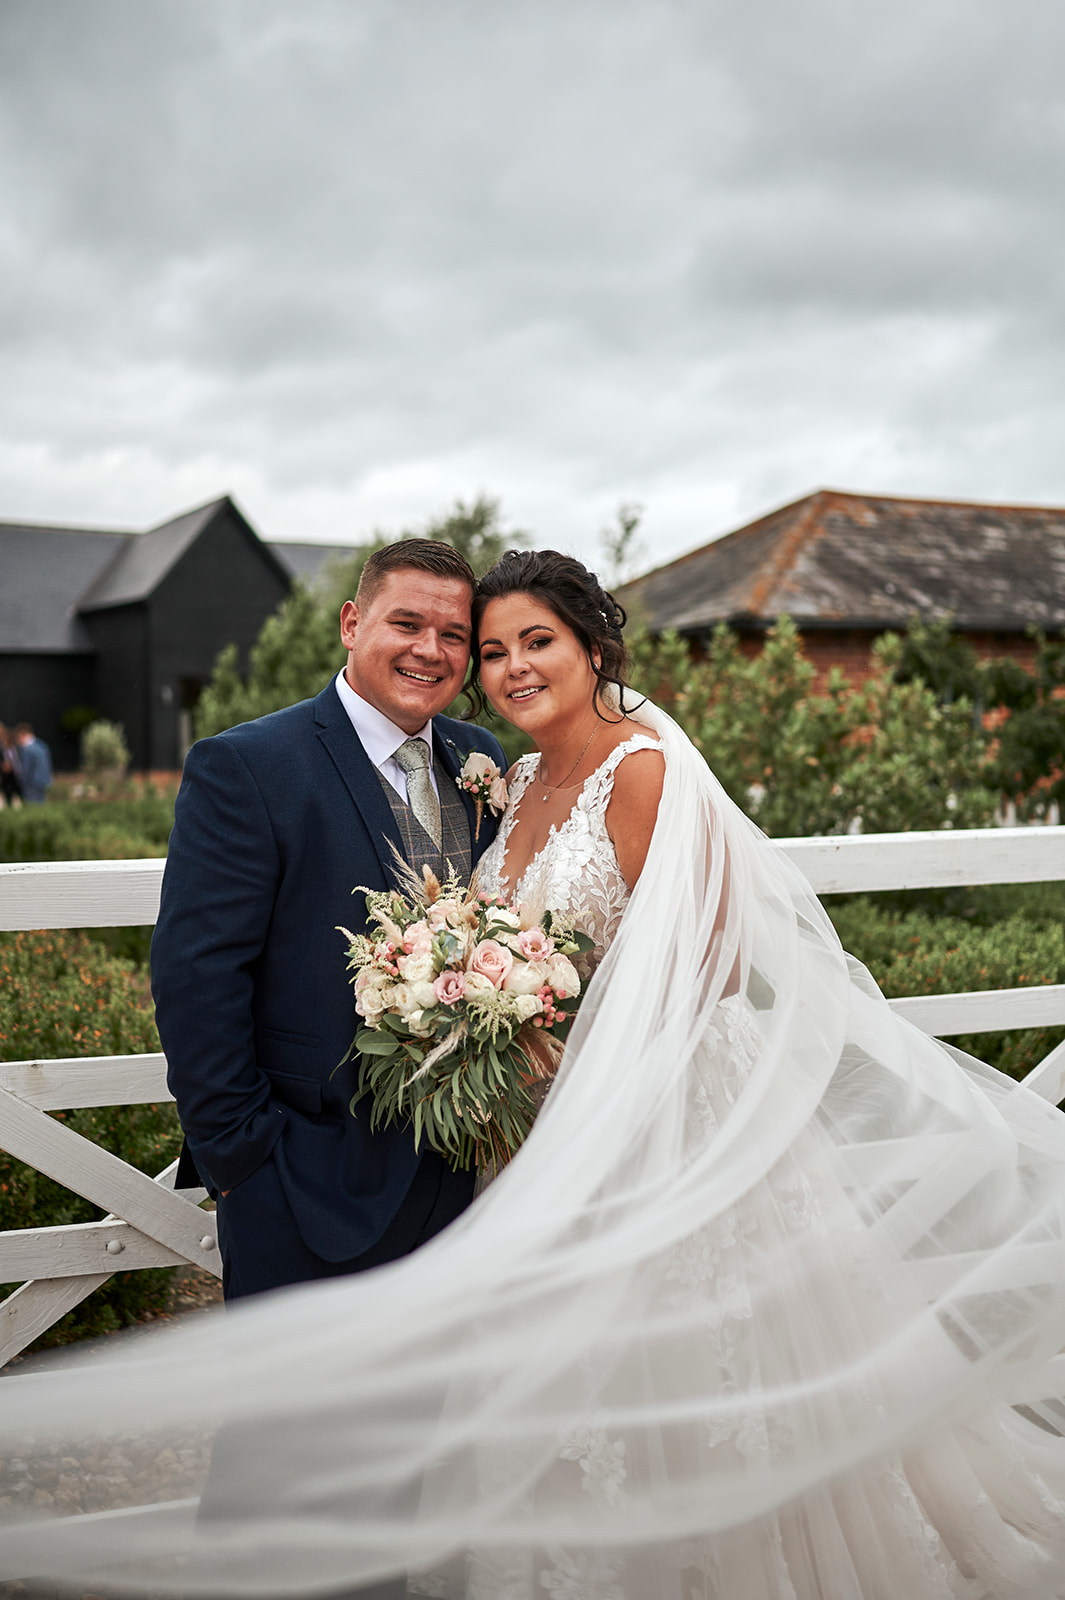 Wedding Couple at Villers Barn Wedding Venue - RACHEL REEVE Photography